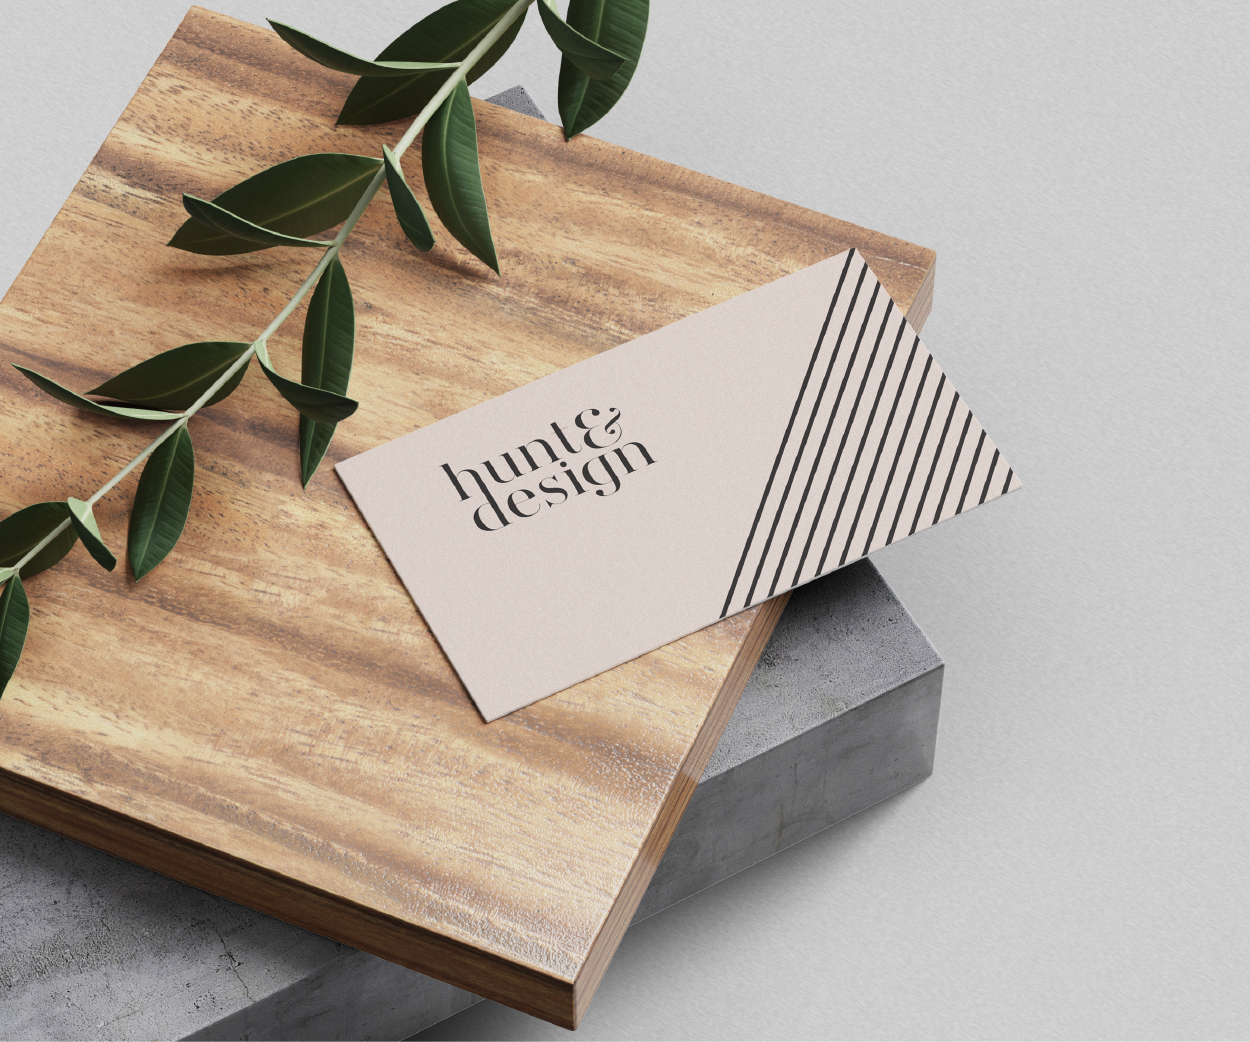 Hunt and Design - an interior design studio Business Card Design Image